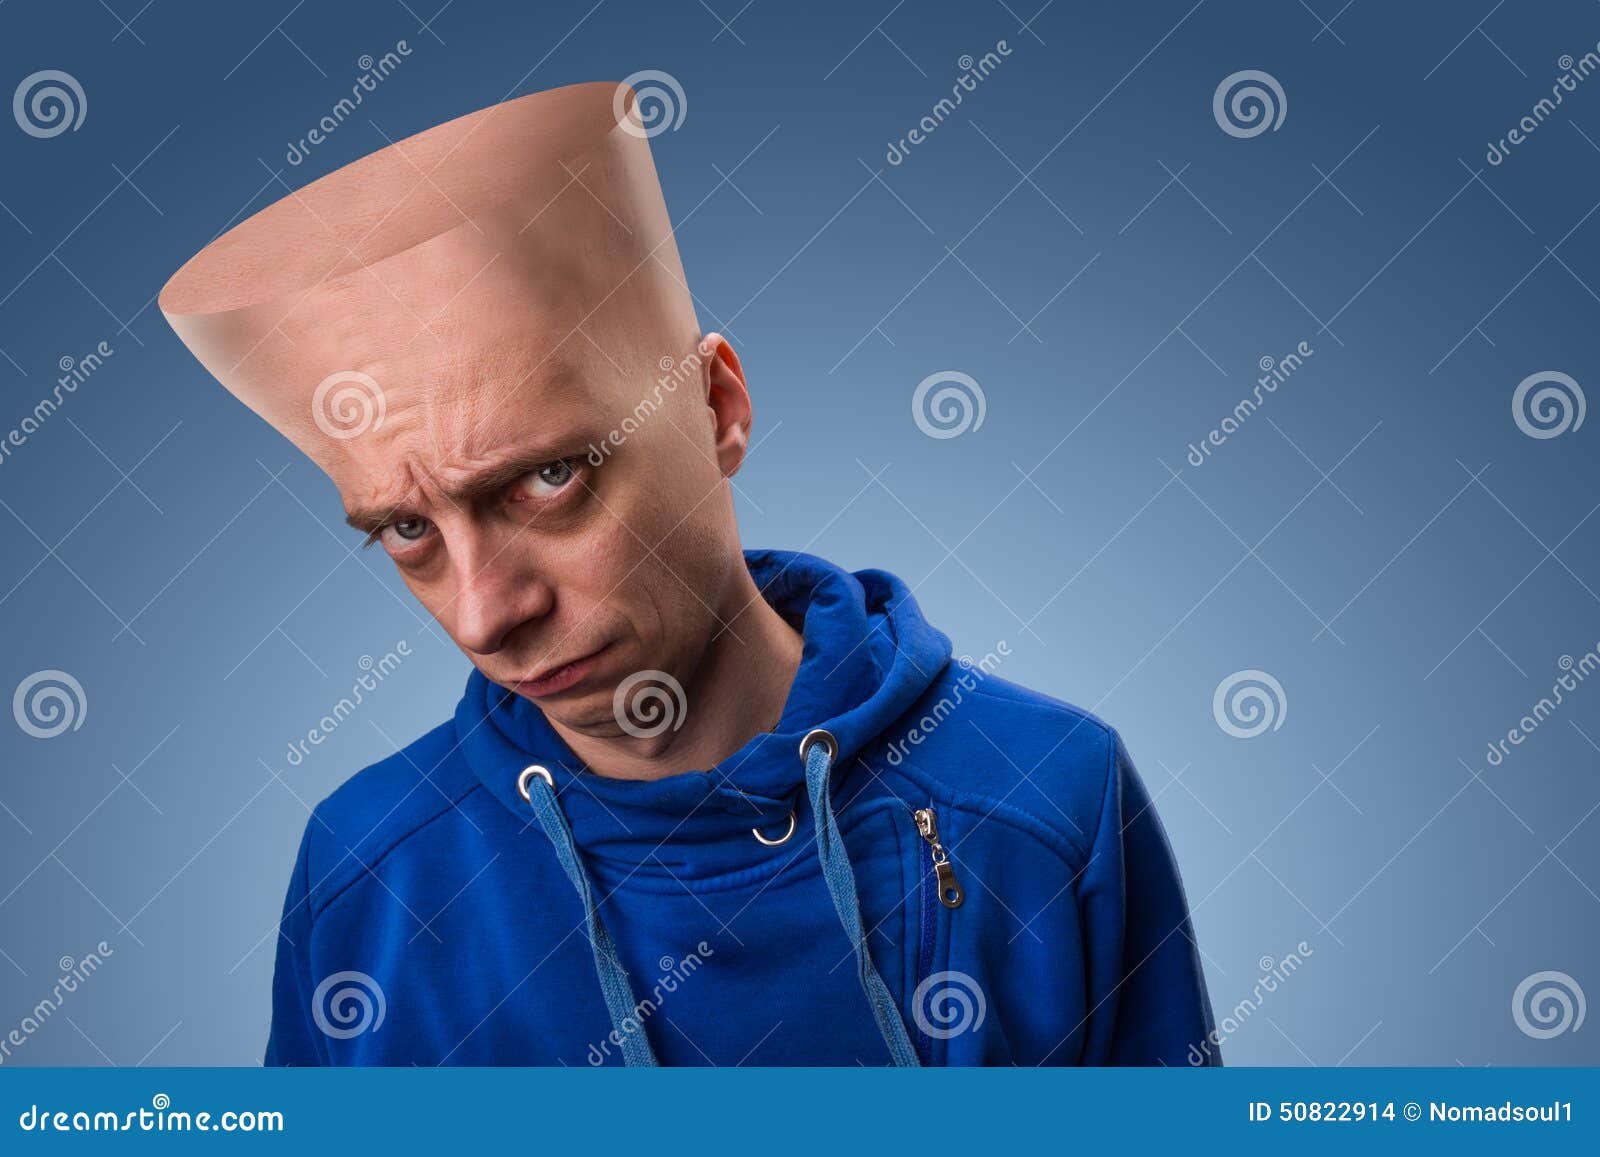 strange man with big head